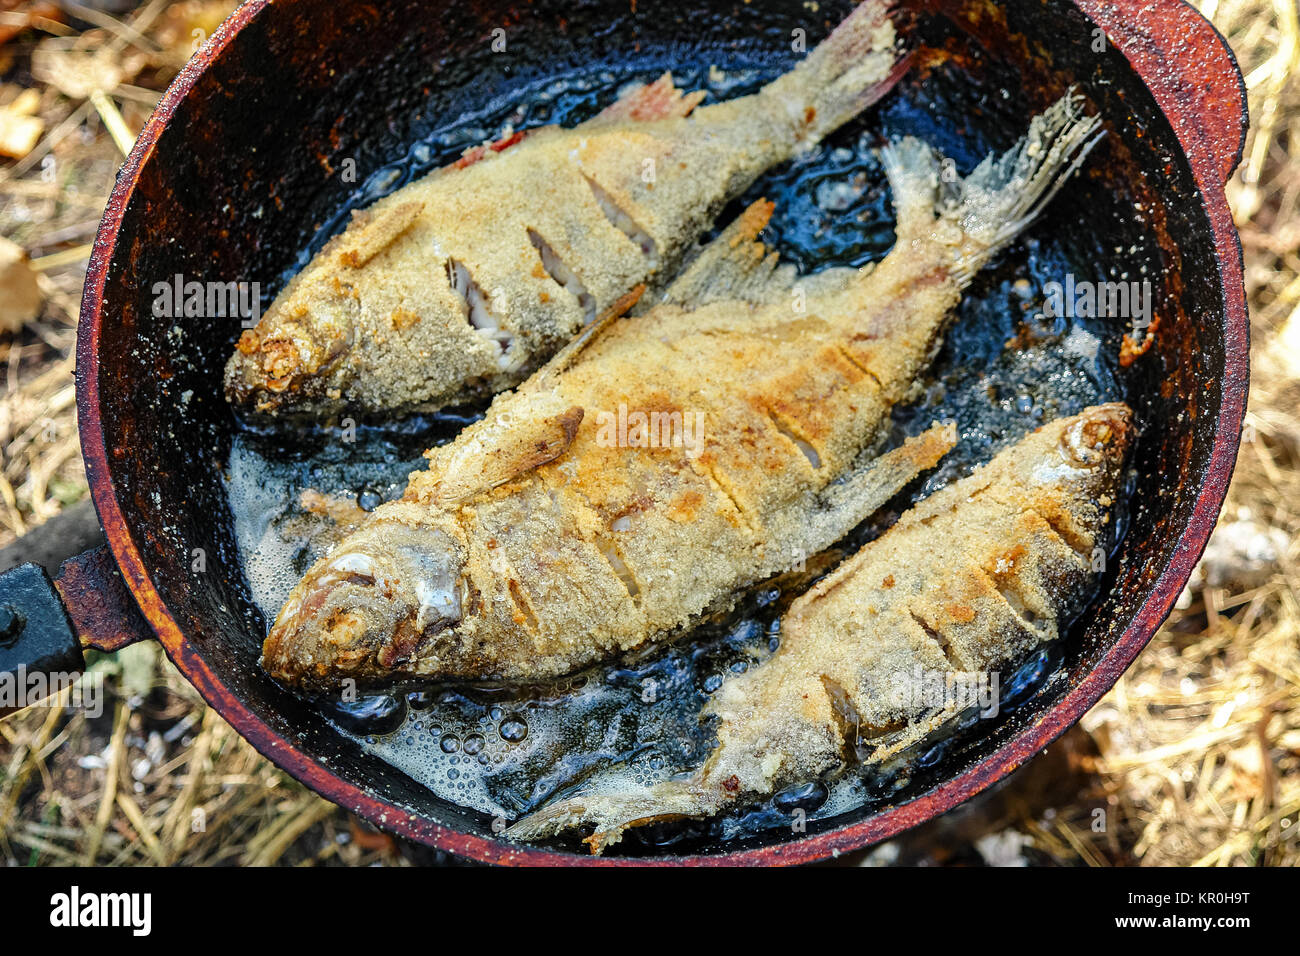 https://c8.alamy.com/comp/KR0H9T/river-fish-fried-in-a-frying-pan-KR0H9T.jpg